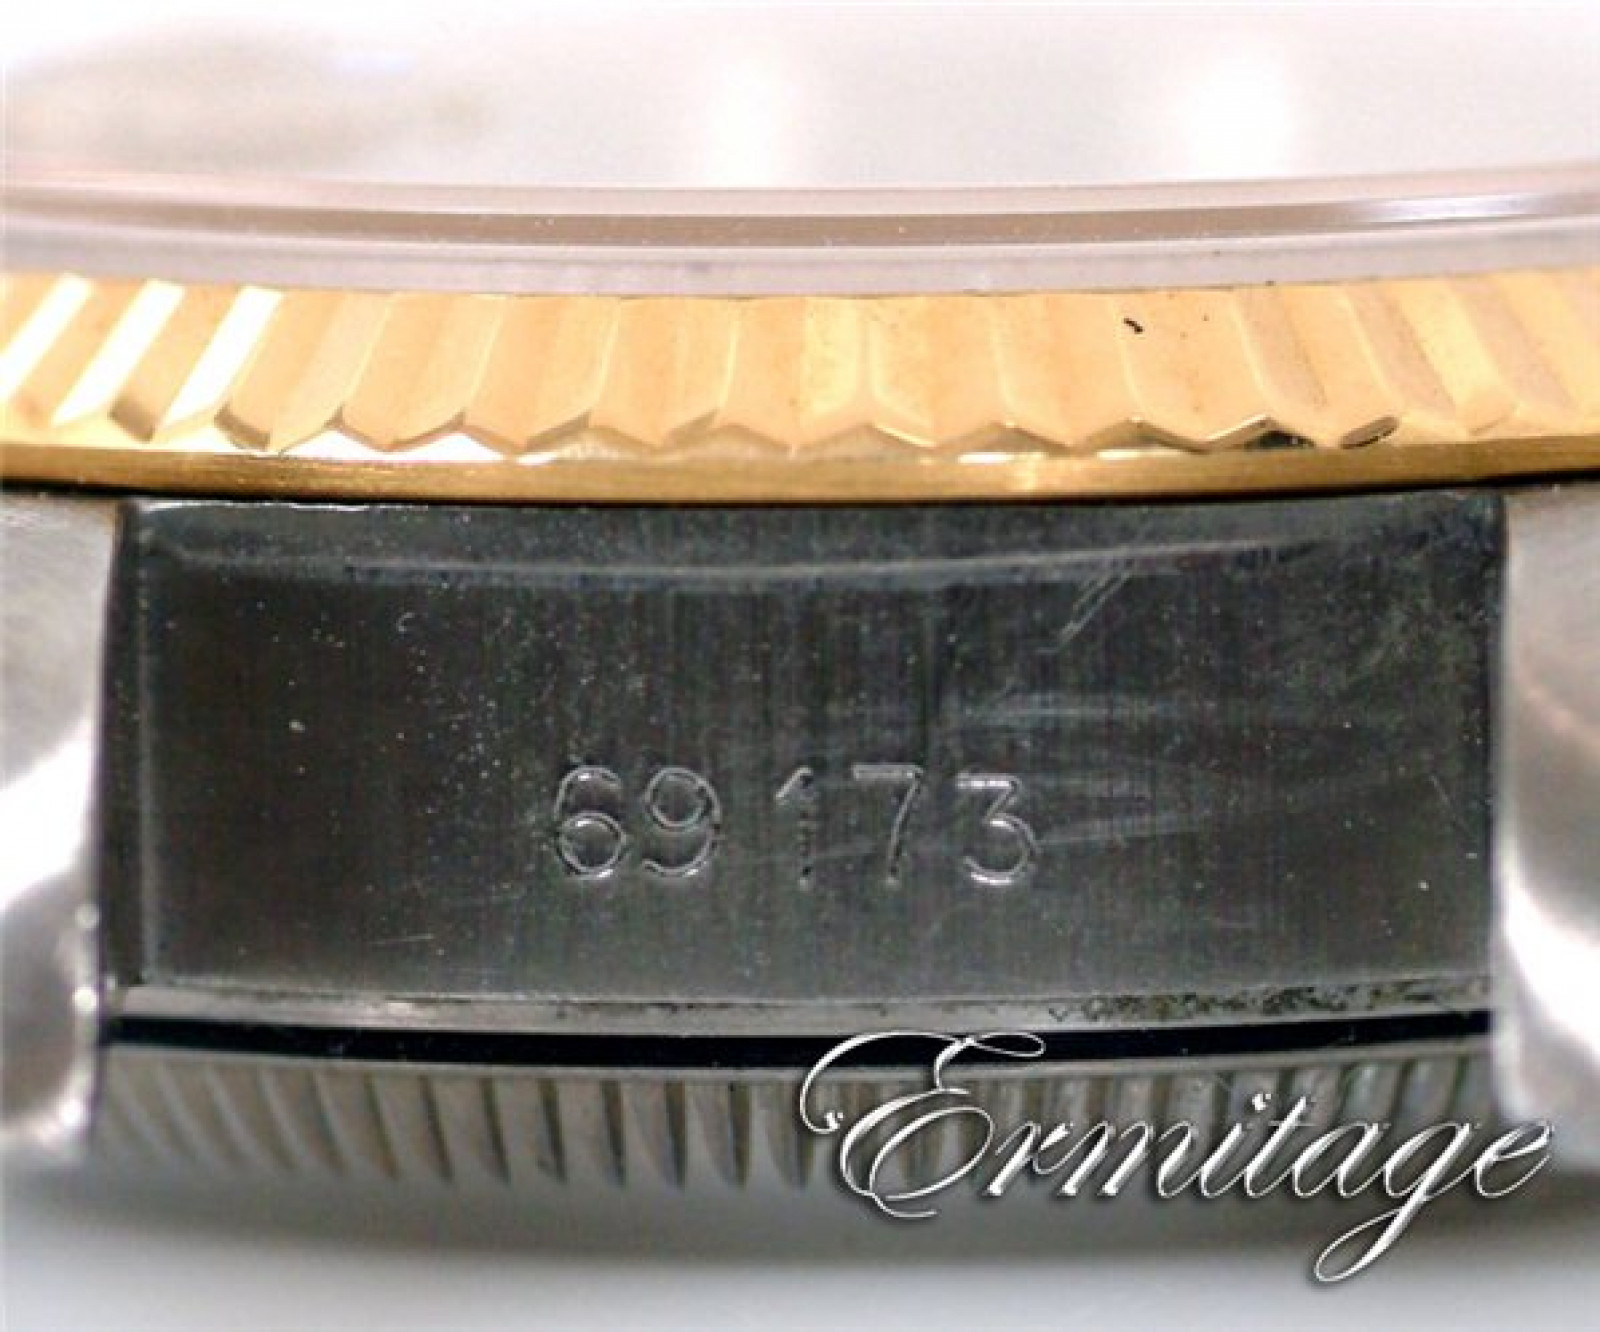 Ladies Gold & Steel Jubilee Rolex Datejust 69173